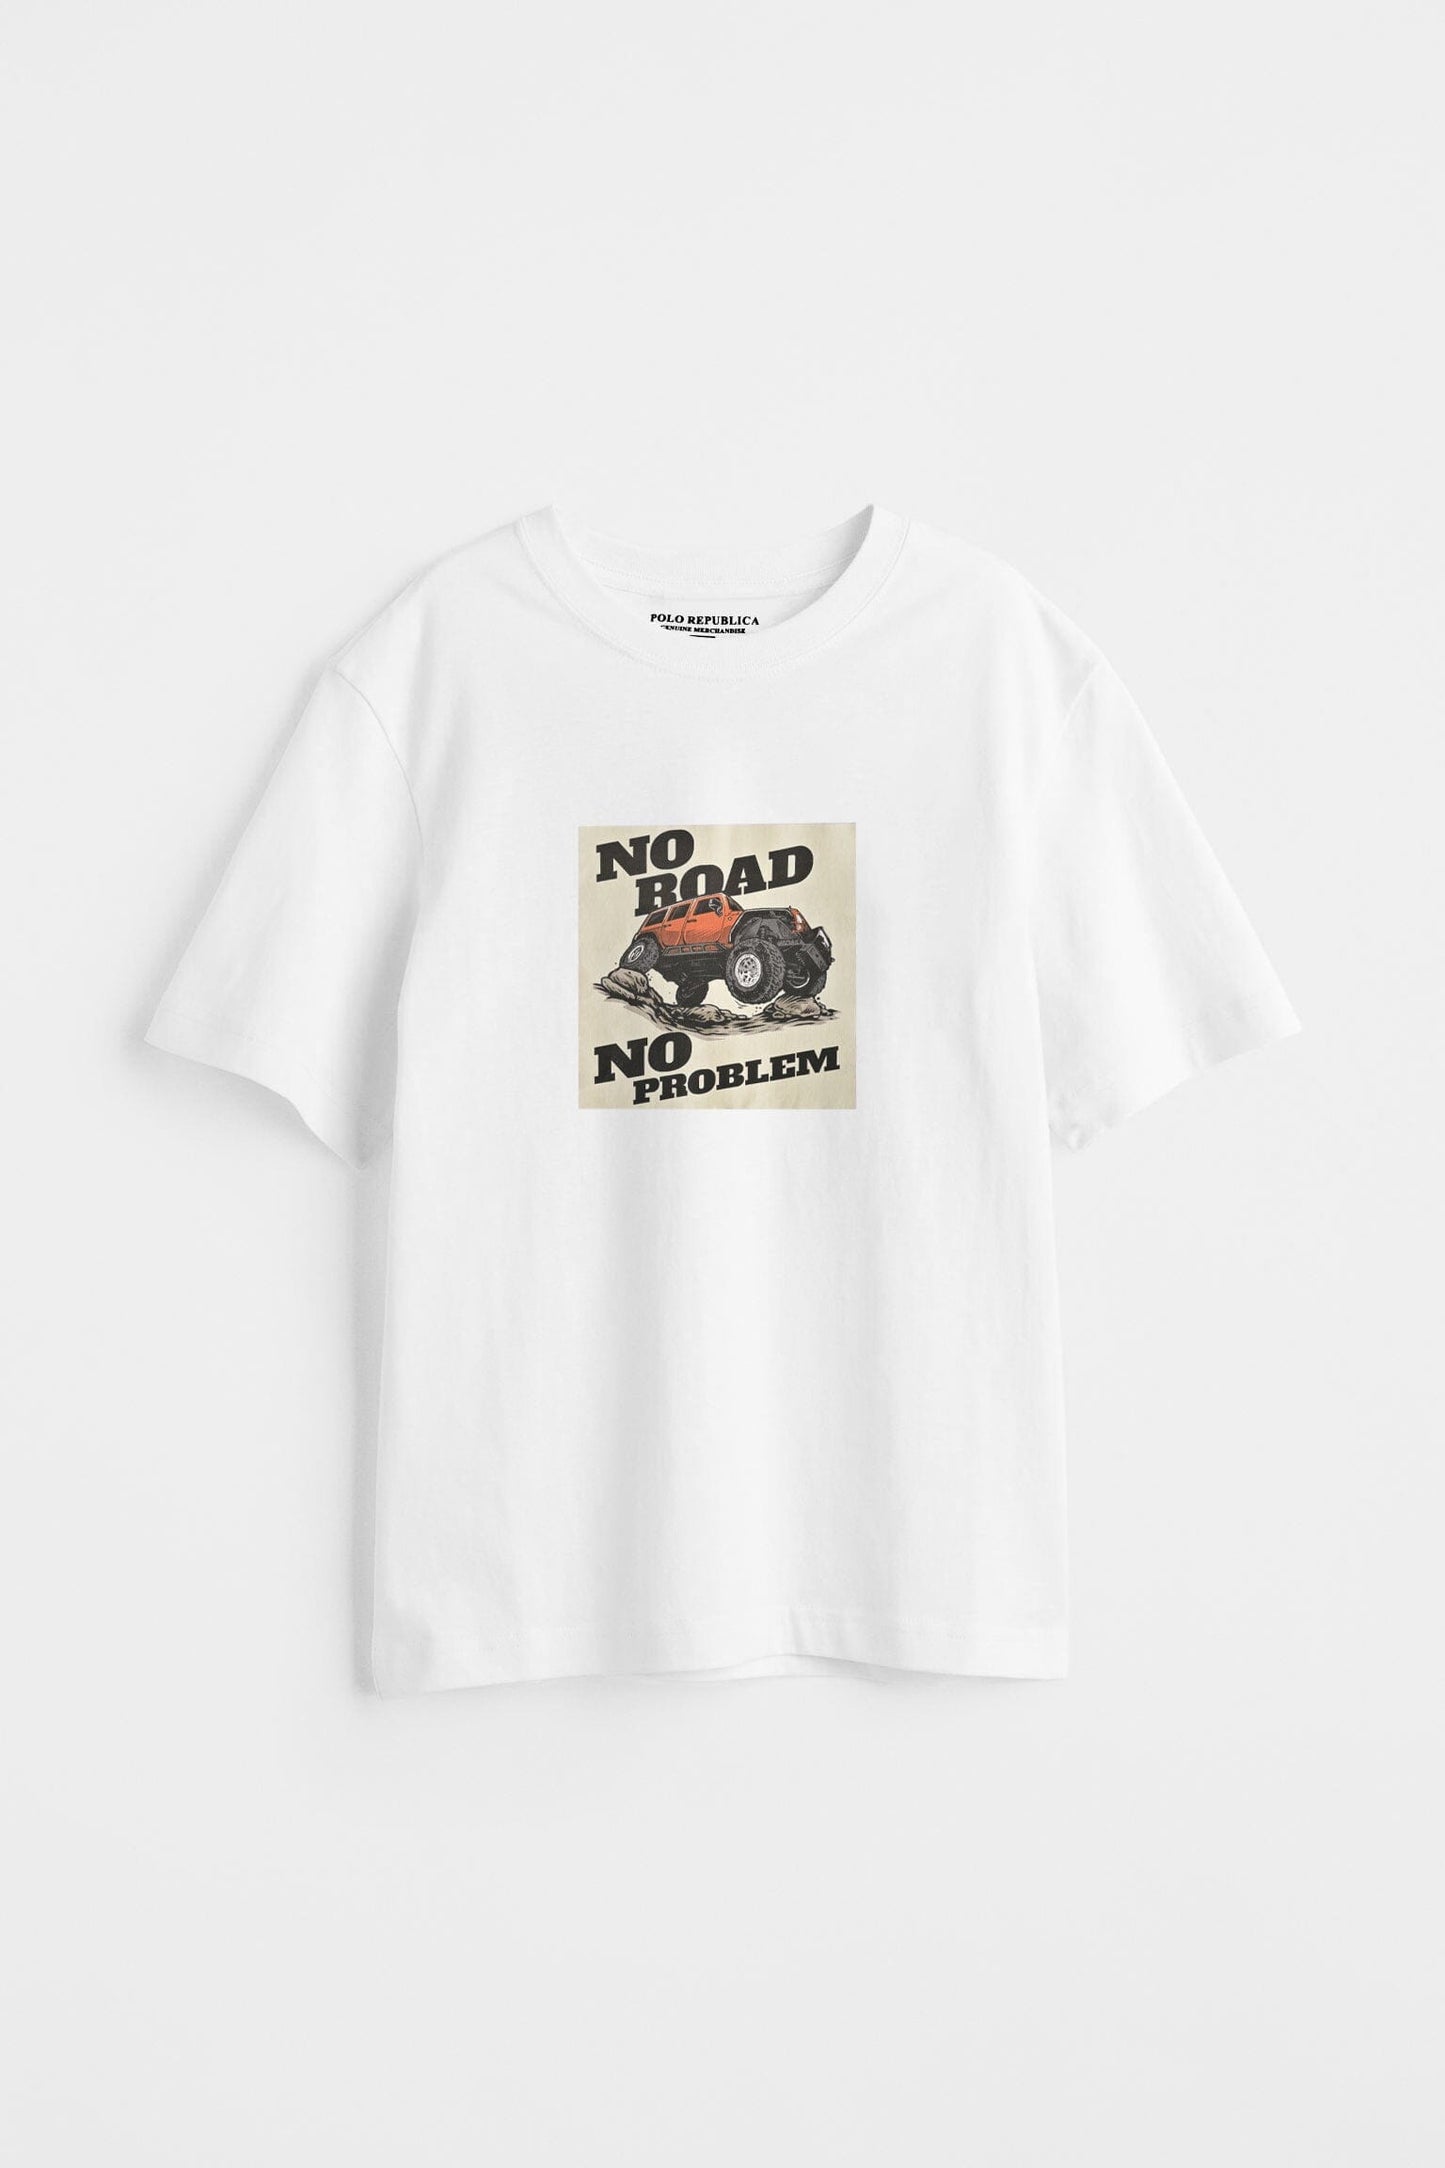 Polo Republica Boy's No Road Printed Tee Shirt Boy's Tee Shirt Polo Republica 